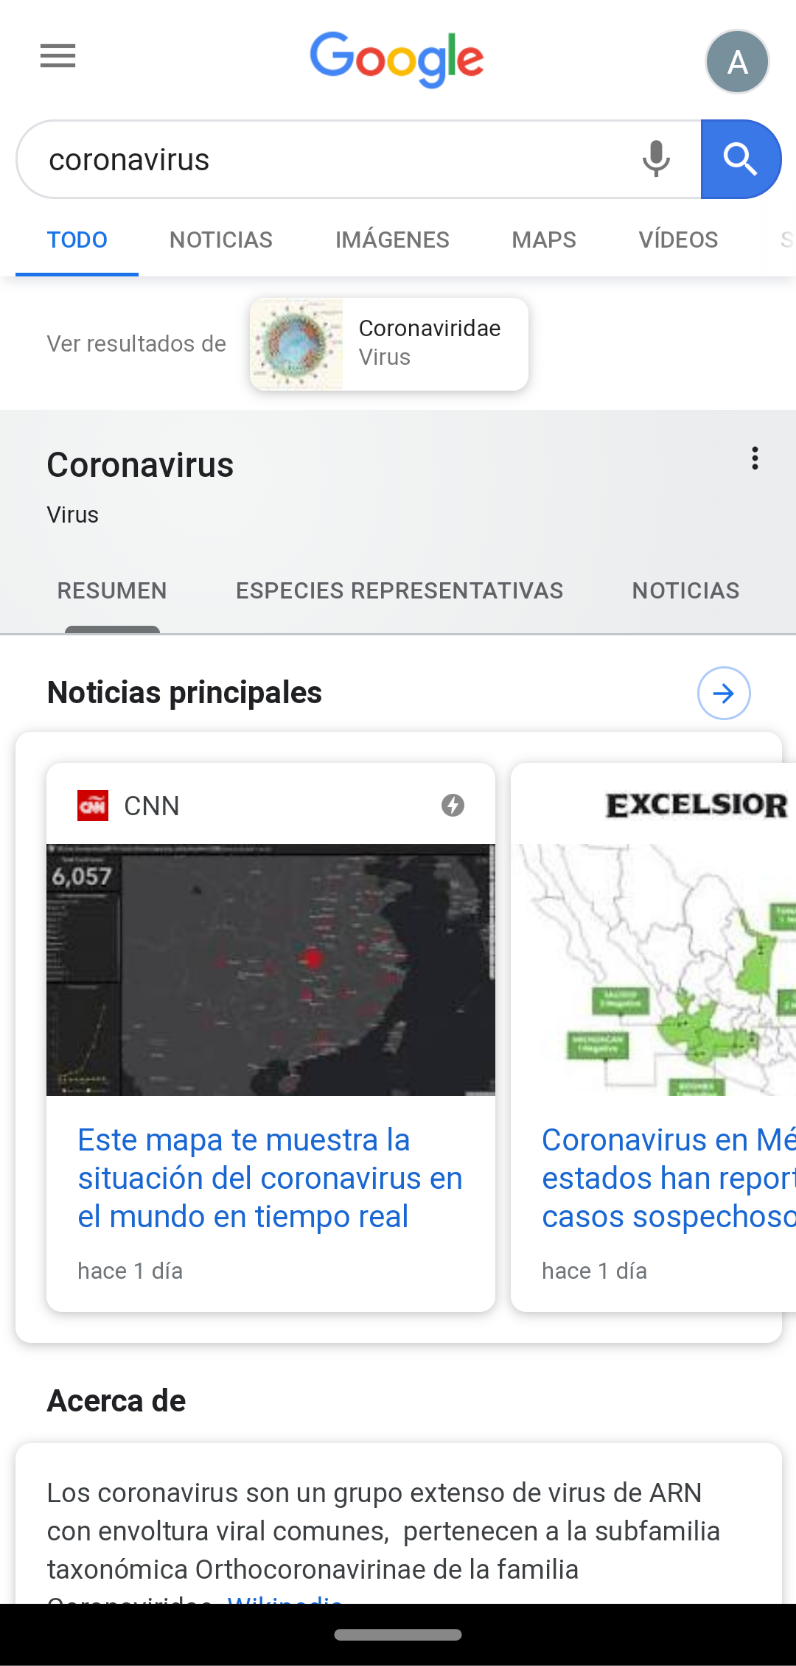 https://img.unocero.com/2020/01/coronavirus-google-mexico.png